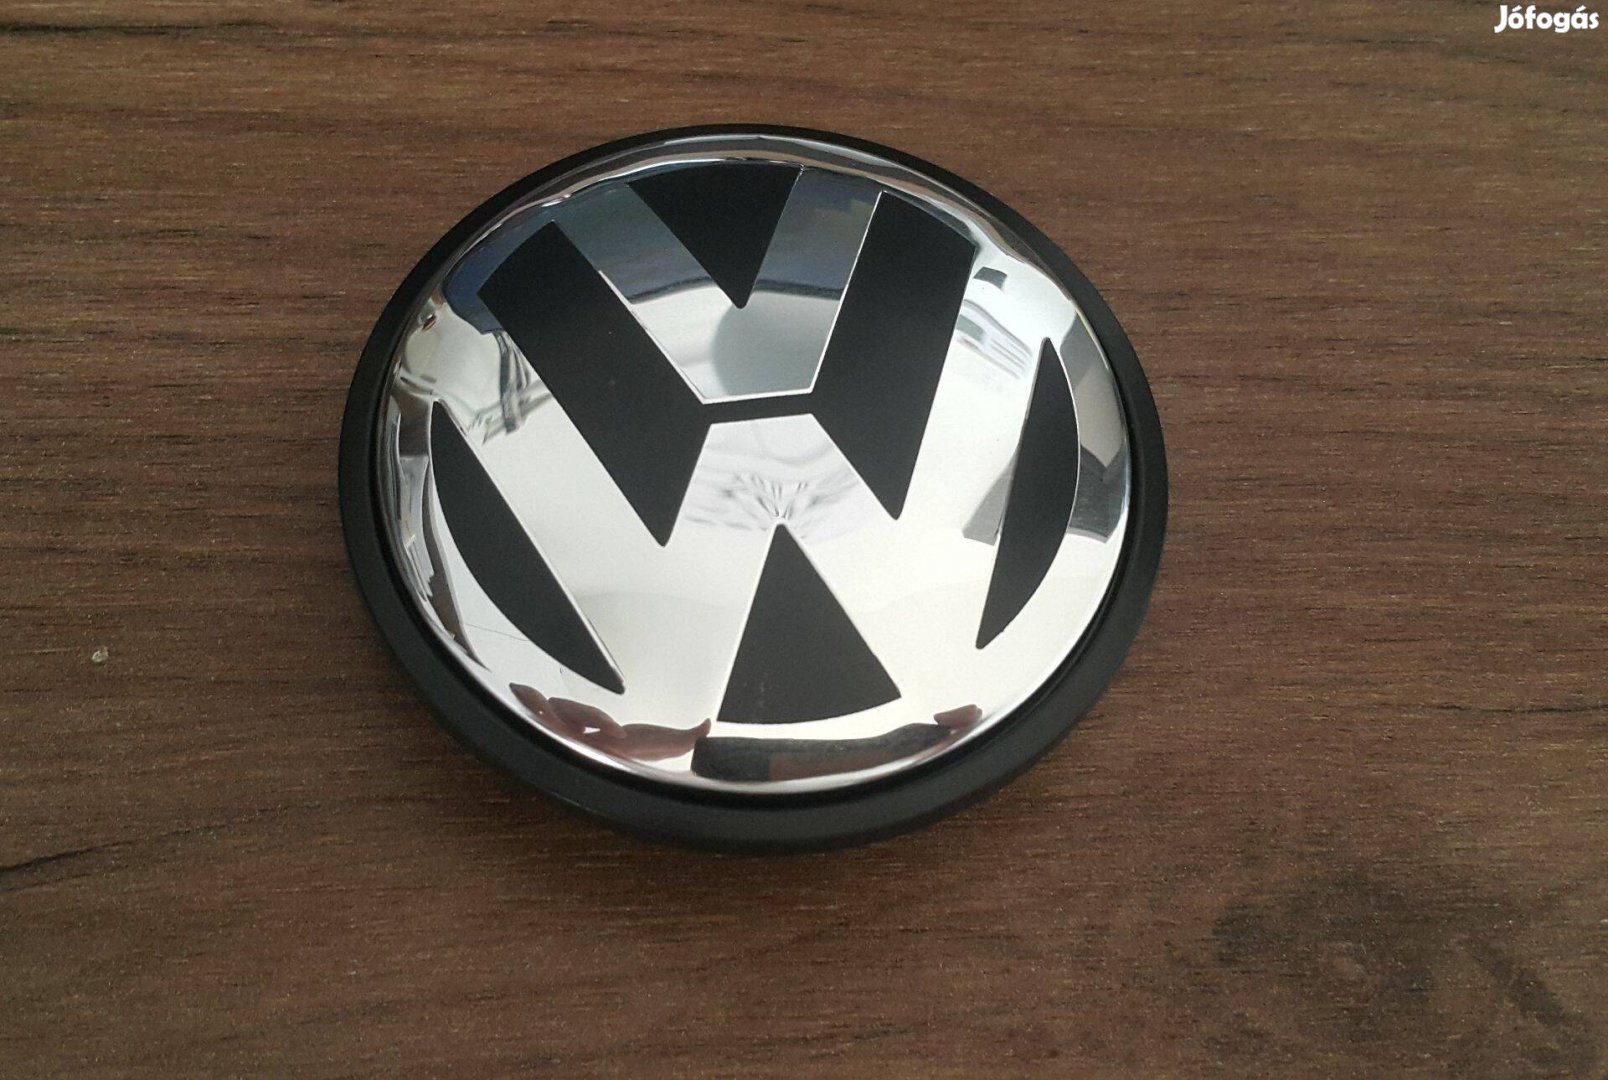 VW Volkswagen alufelni felni kupak közép porvédő 7L6601149 - 76 mm